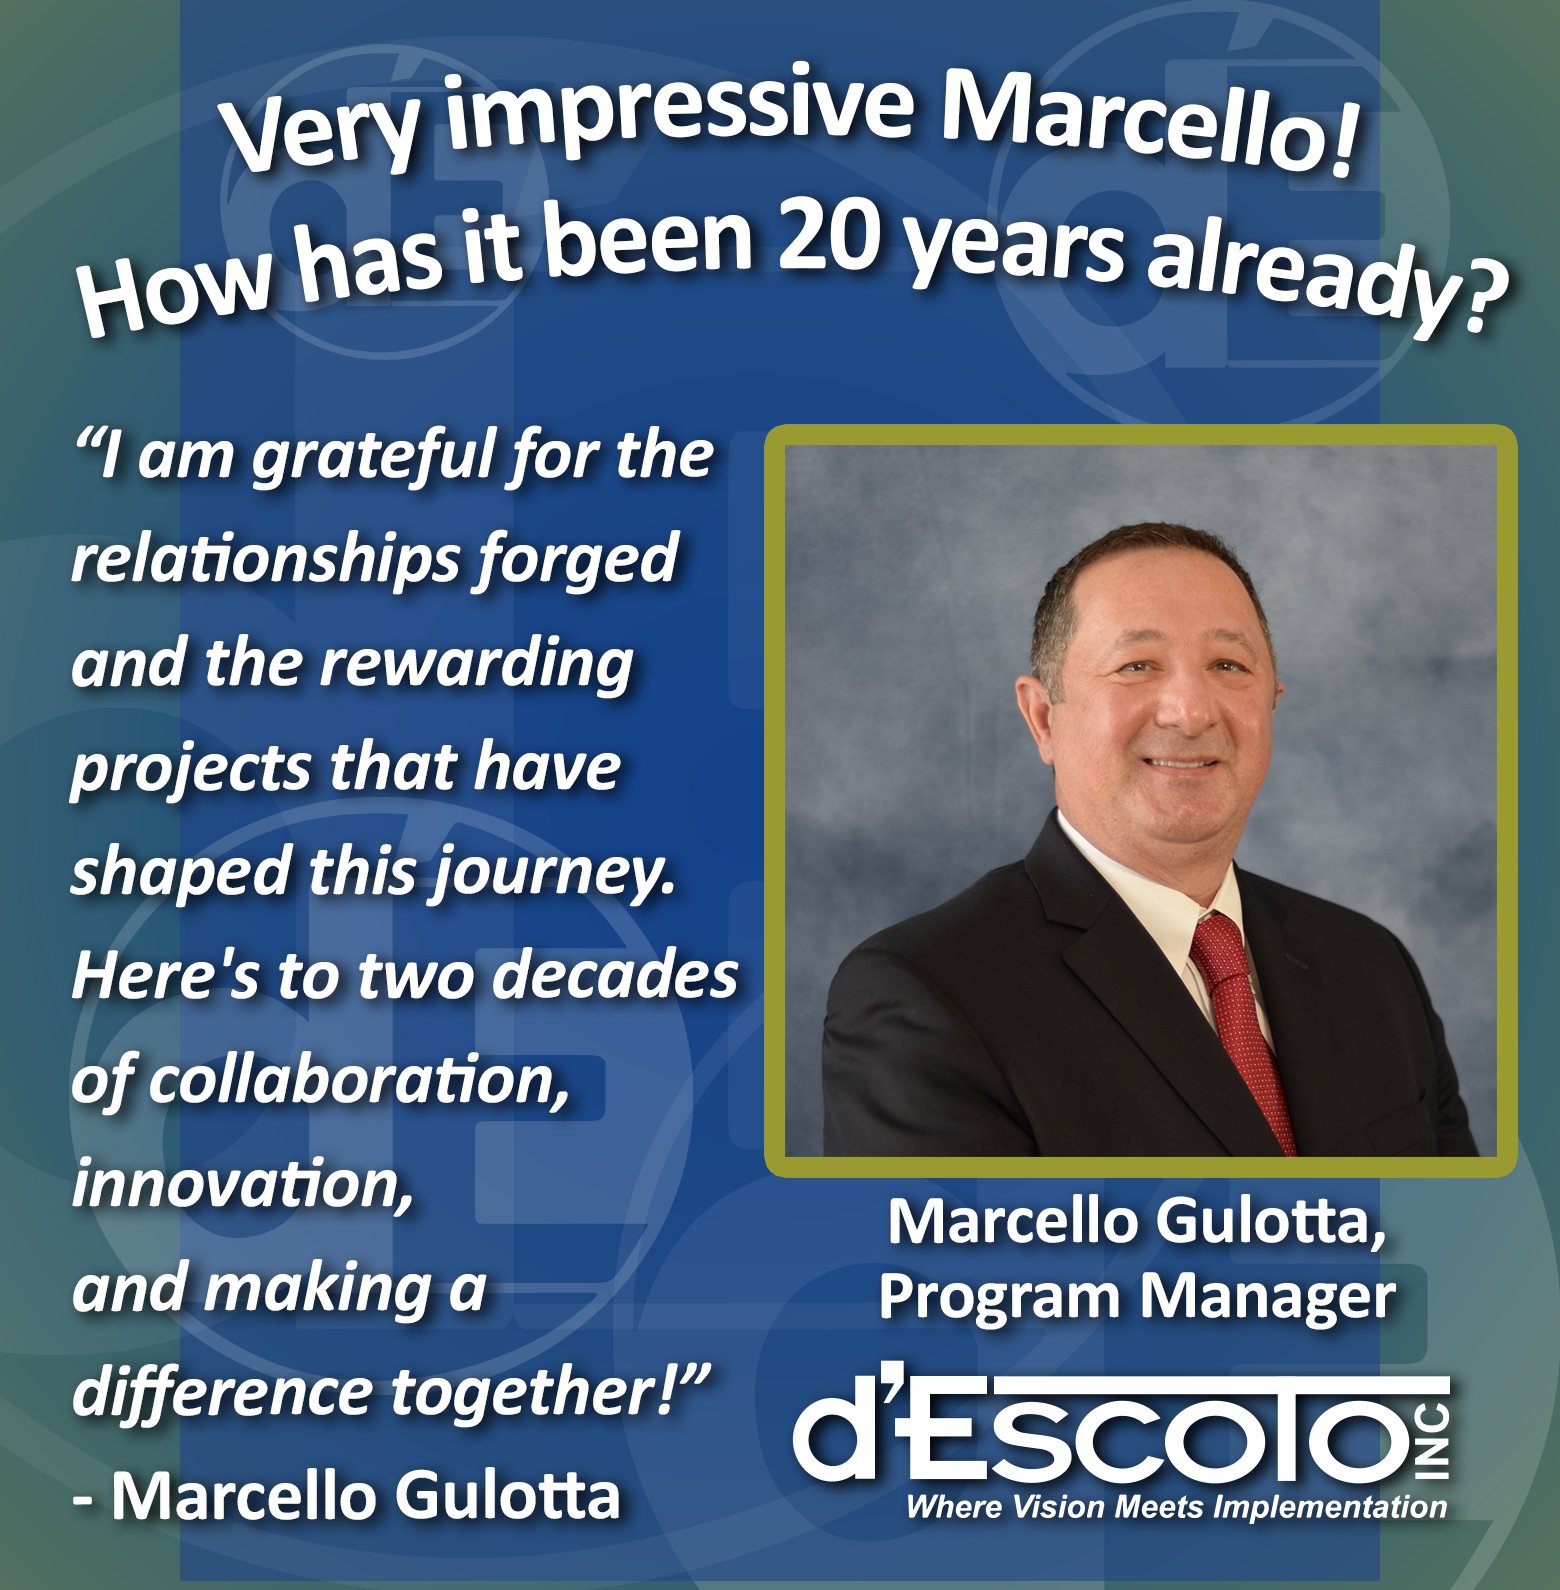 d'Escoto, Inc. on X: Exciting Milestone Alert! Today, Marcello